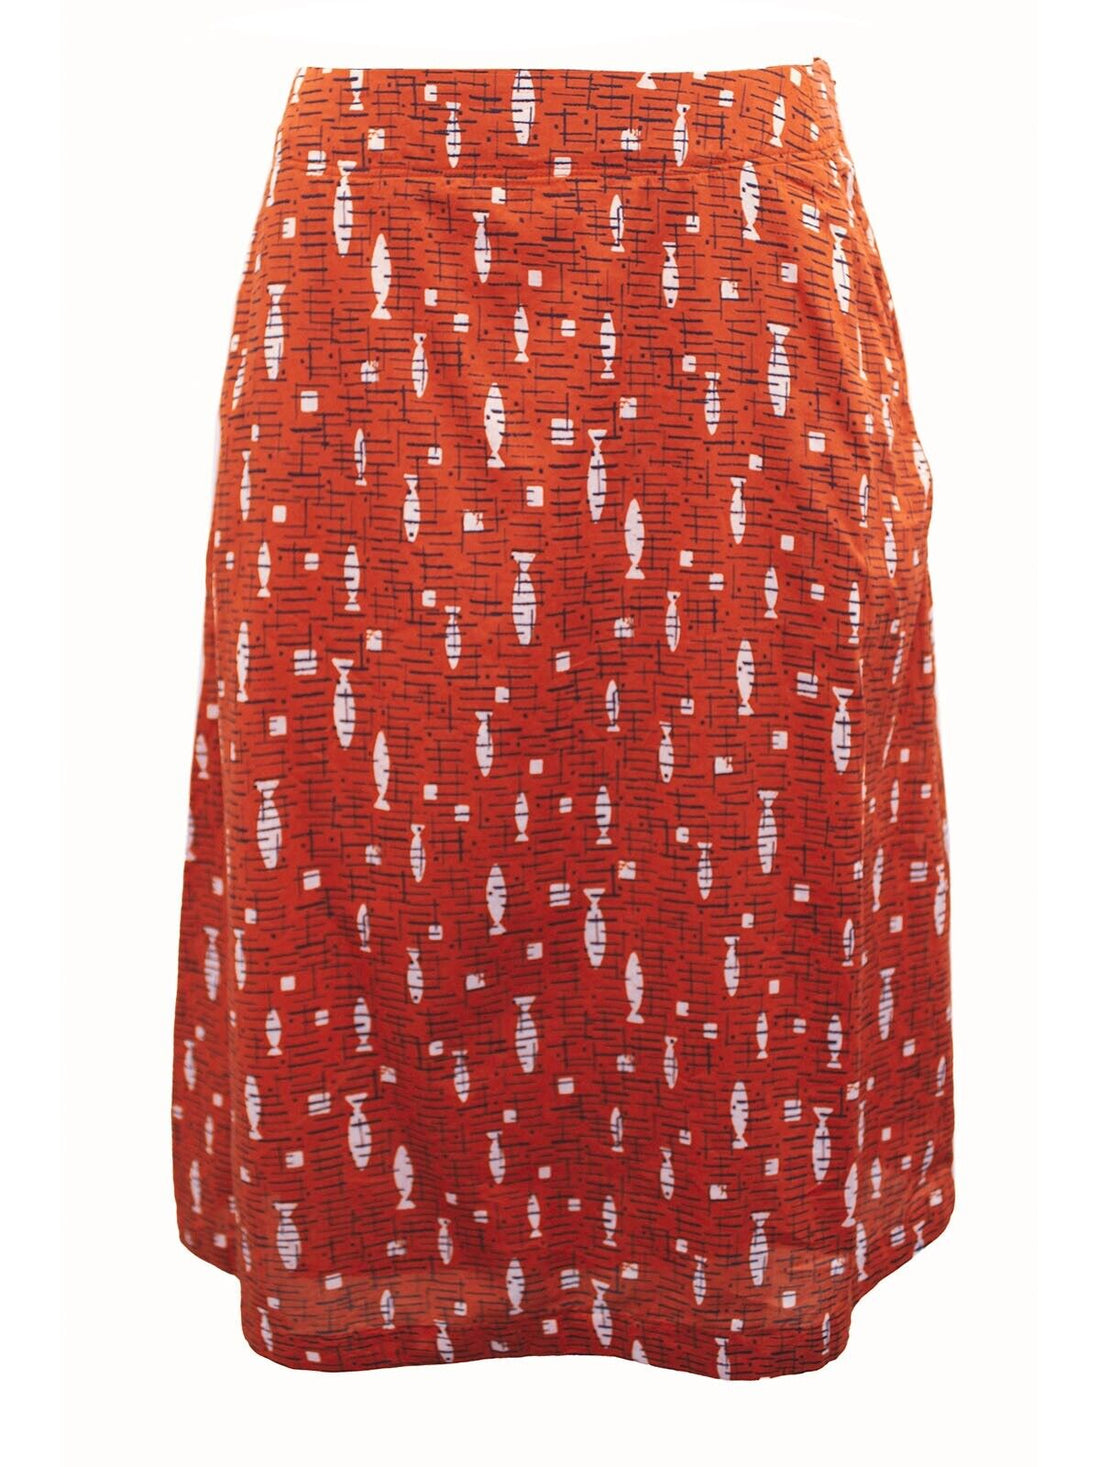 EX Seasalt Brick Red Paint Pot Skirt in Size 16 see description for measurements